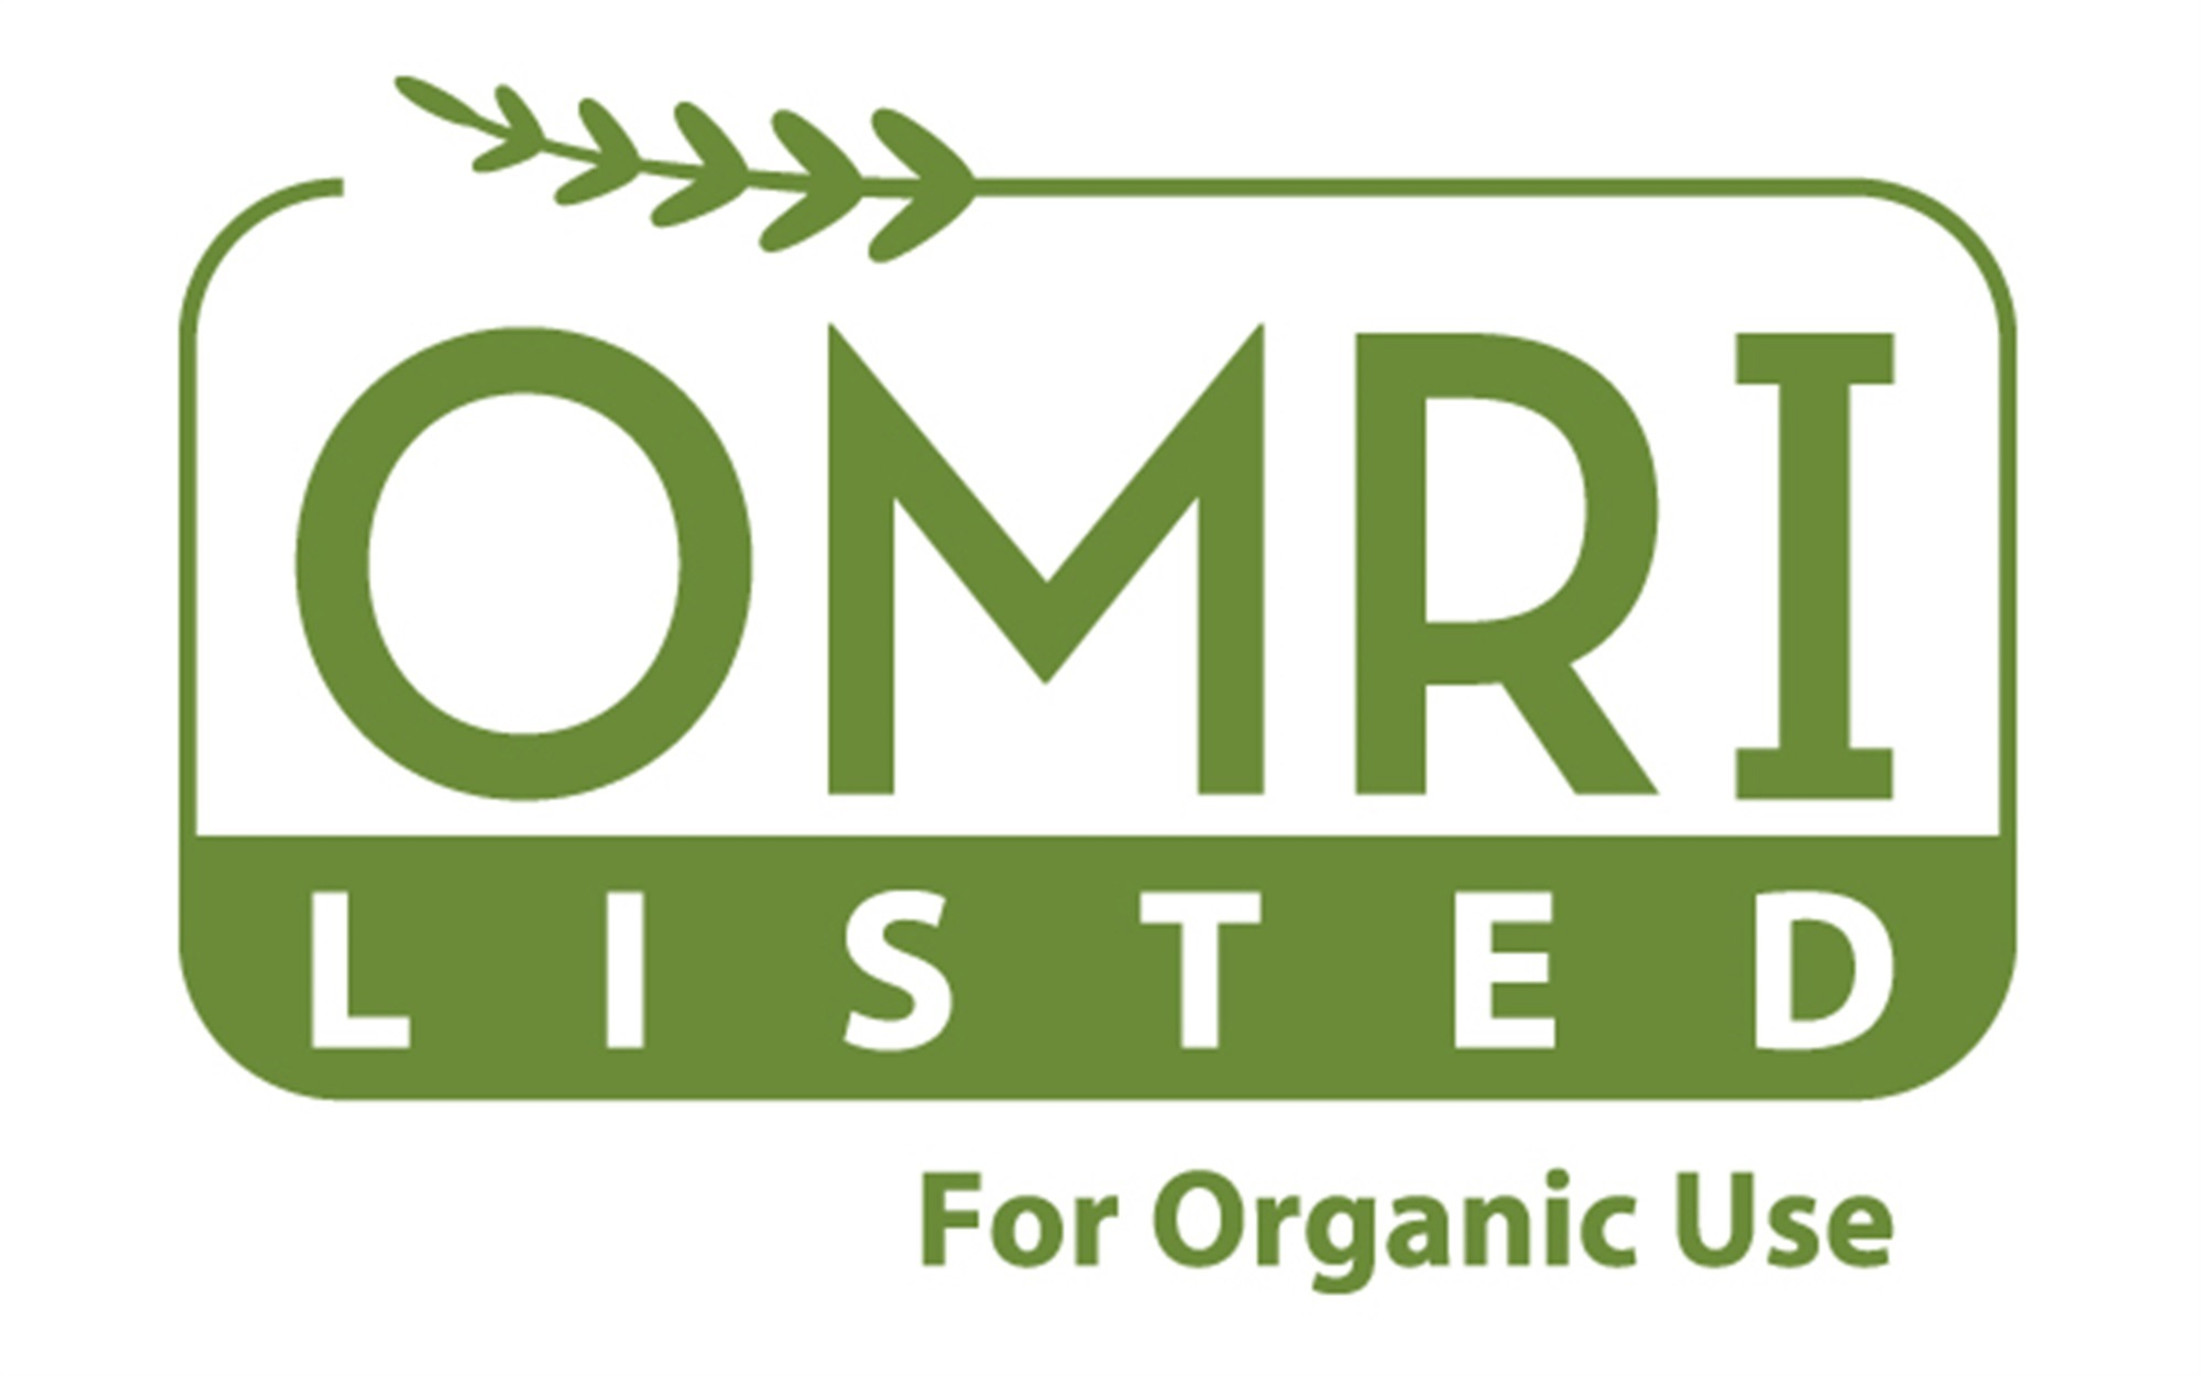 Down to Earth Organic Bone Meal Fertilizer 3-15-0, 25 lb